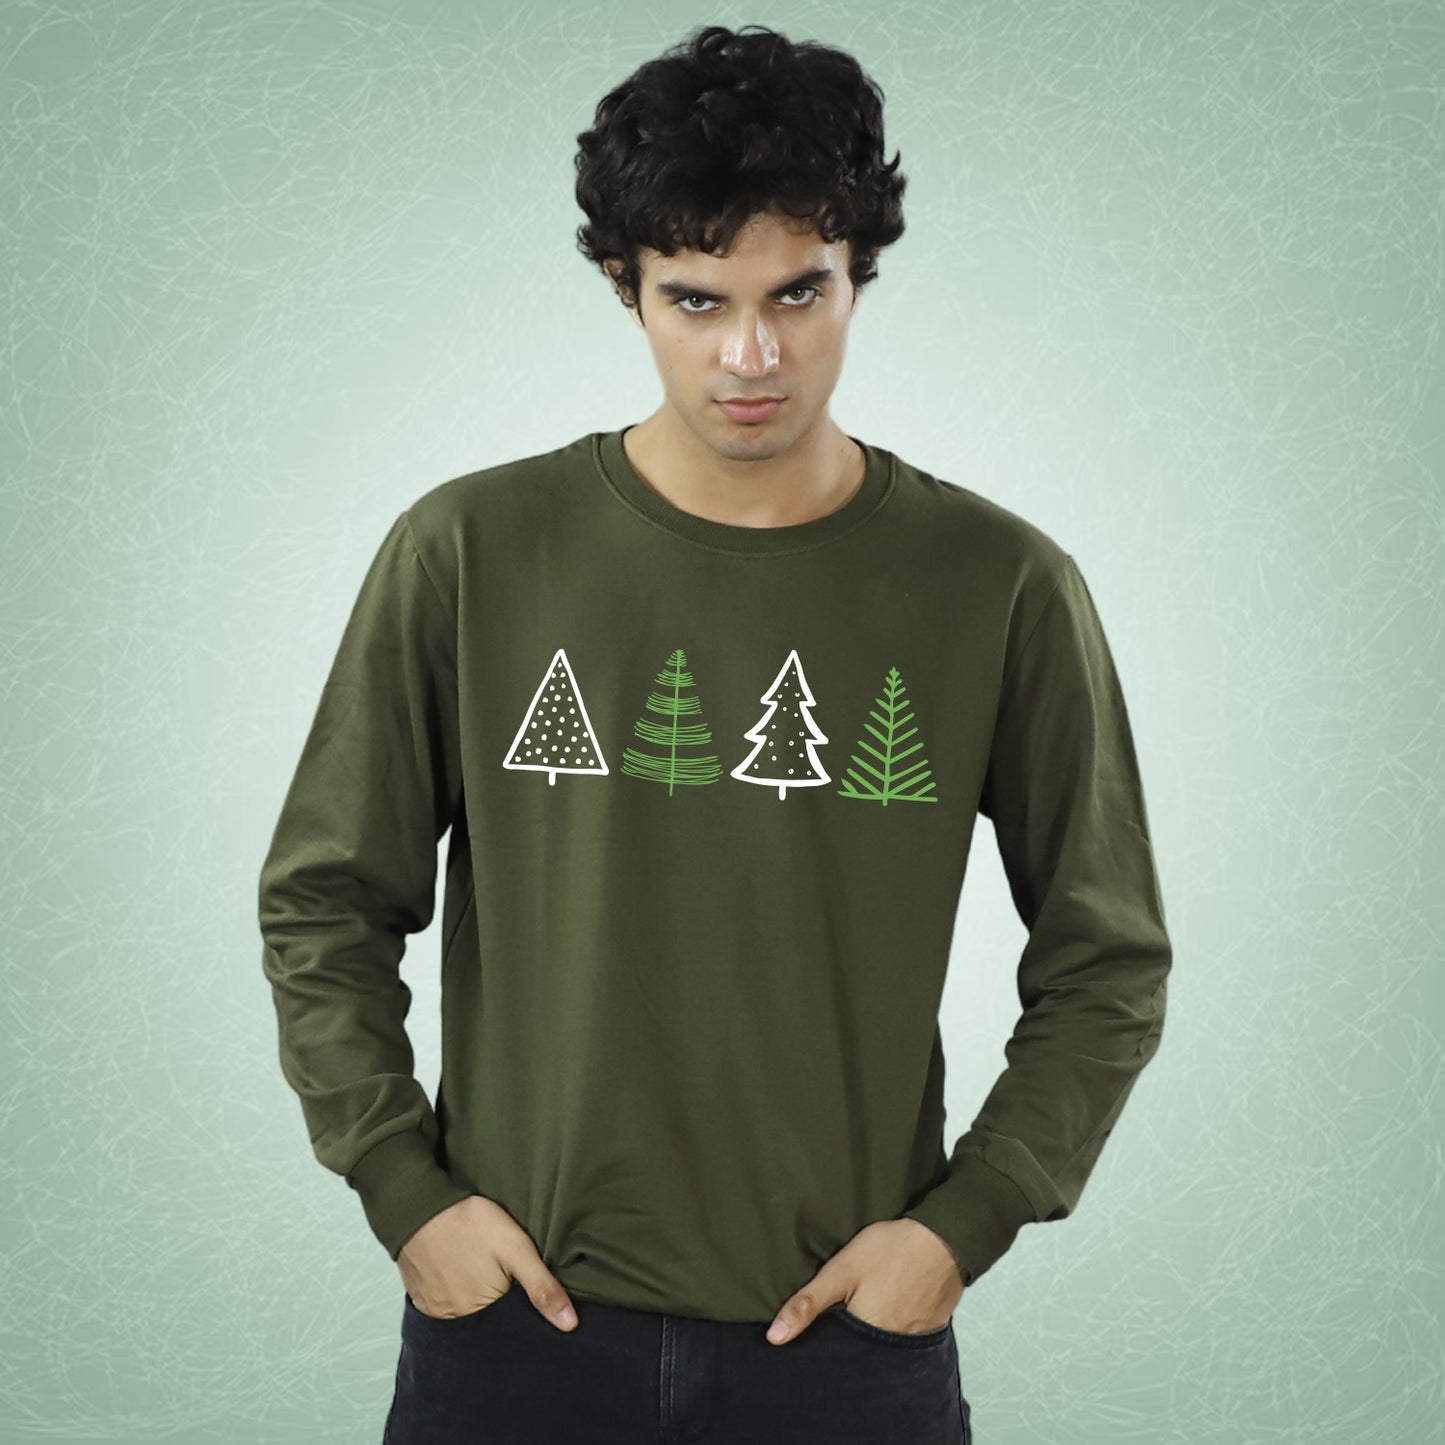 Christmas Trees on Sweatshirt